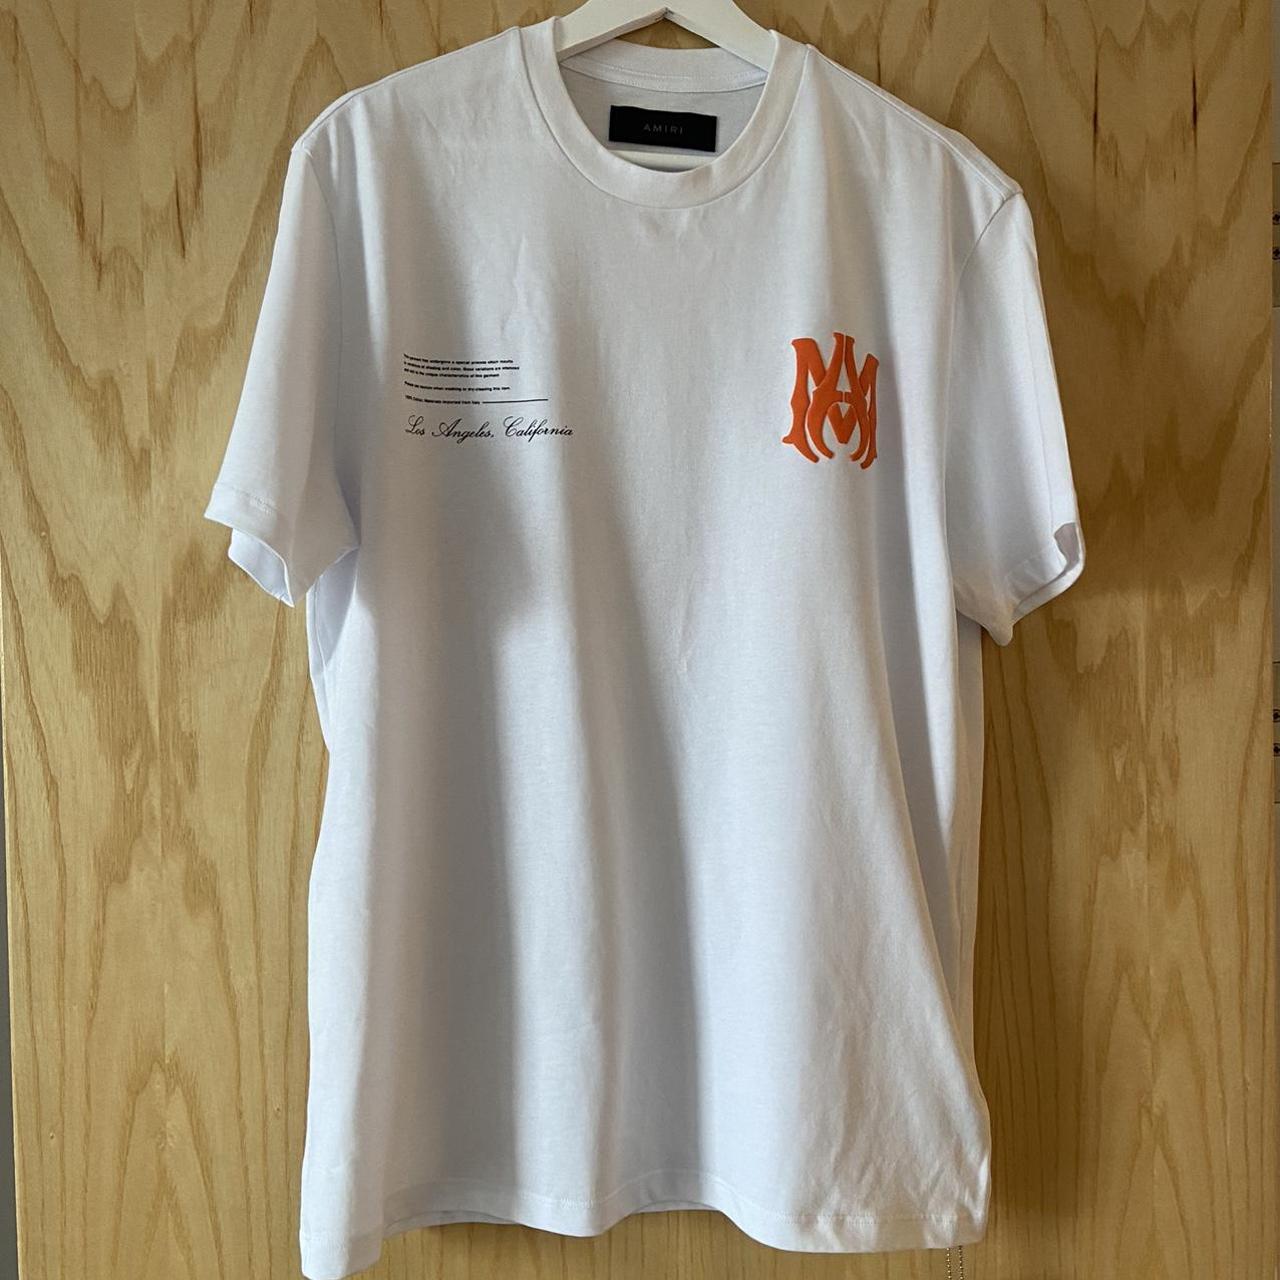 Amiri Men's Logo-Print Cotton-Jersey T-Shirt